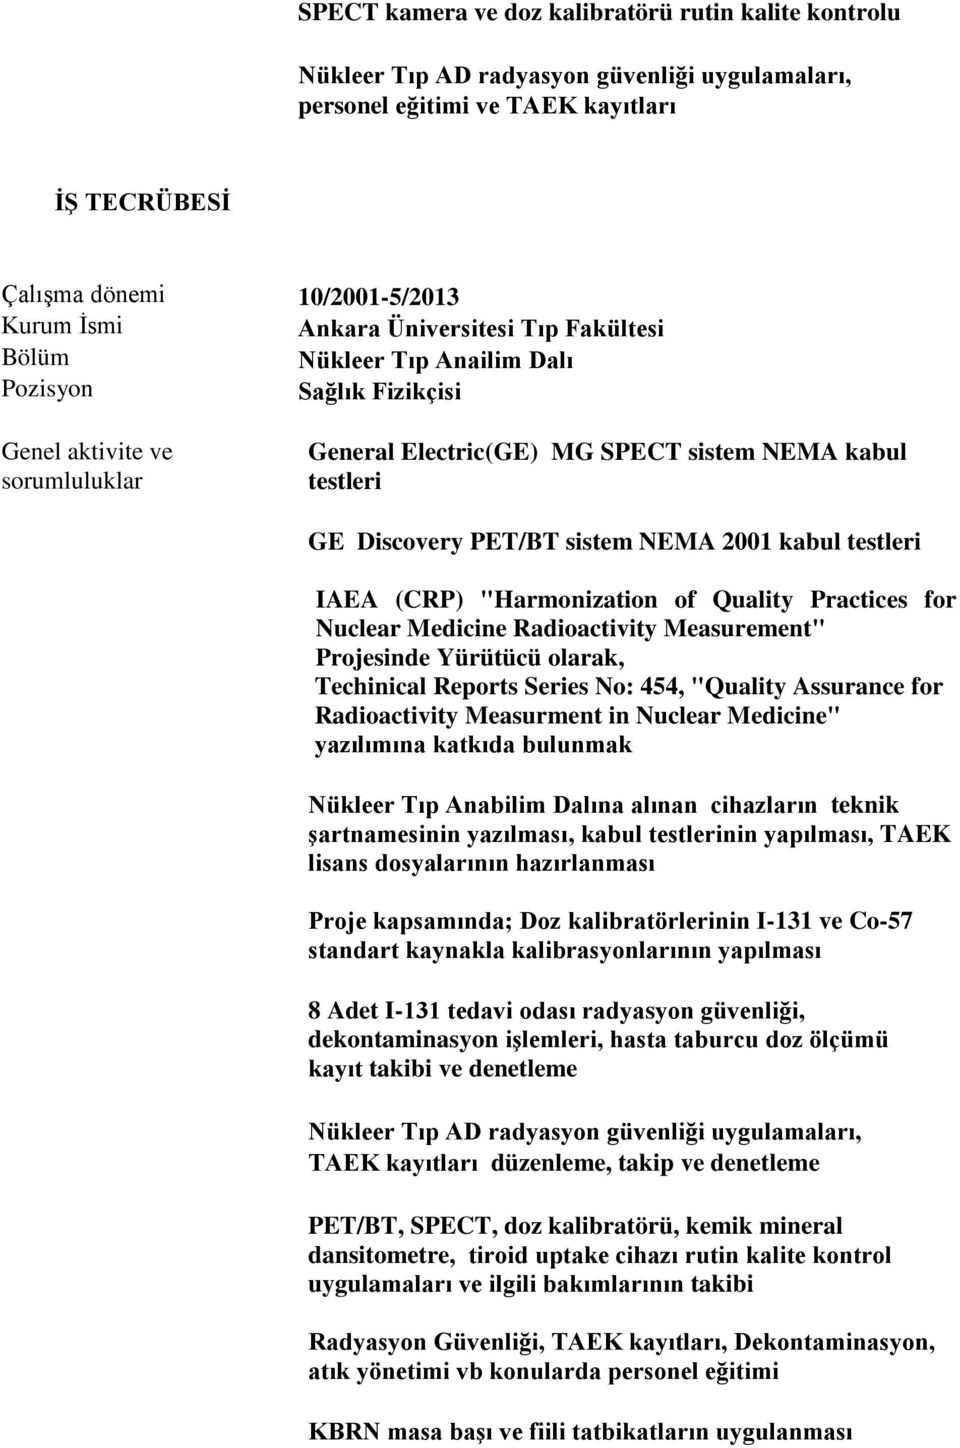 Quality Practices for Nuclear Medicine Radioactivity Measurement" Projesinde Yürütücü olarak, Techinical Reports Series No: 454, "Quality Assurance for Radioactivity Measurment in Nuclear Medicine"